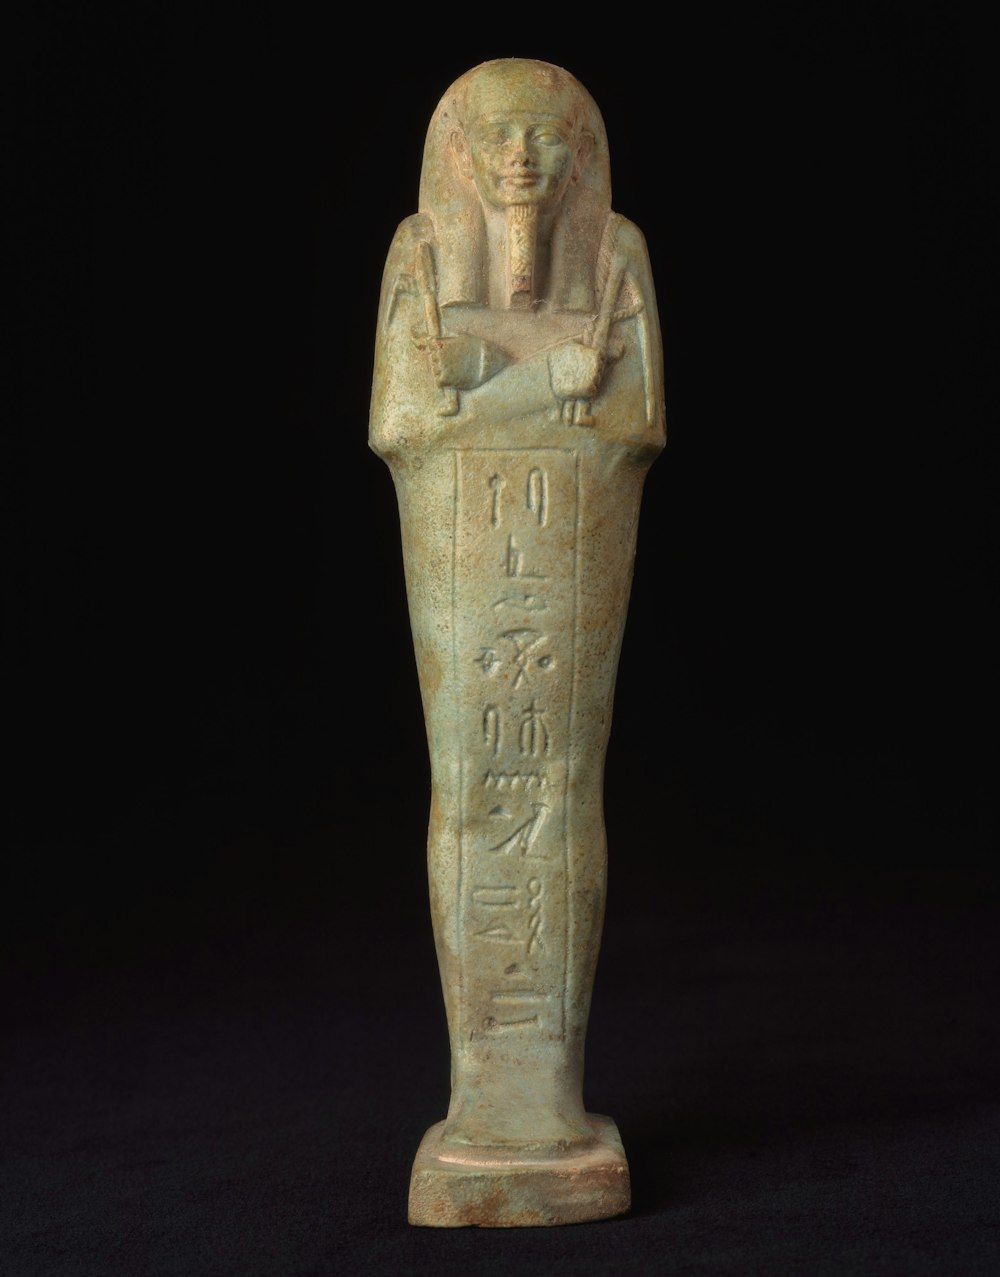 a statue of an egyptian pharaoh